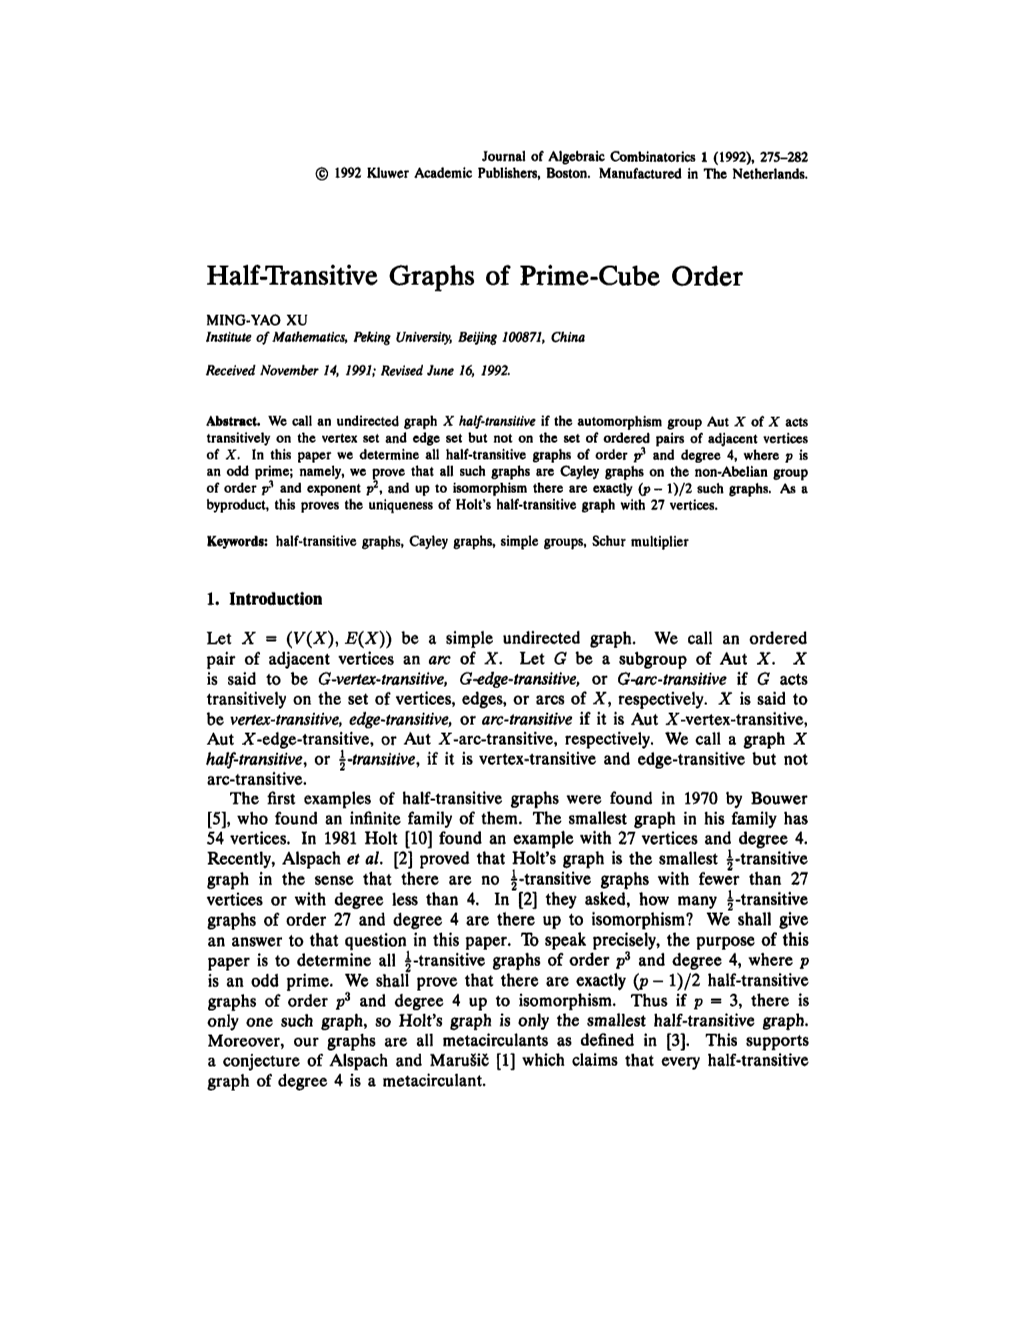 Half-Transitive Graphs of Prime-Cube Order